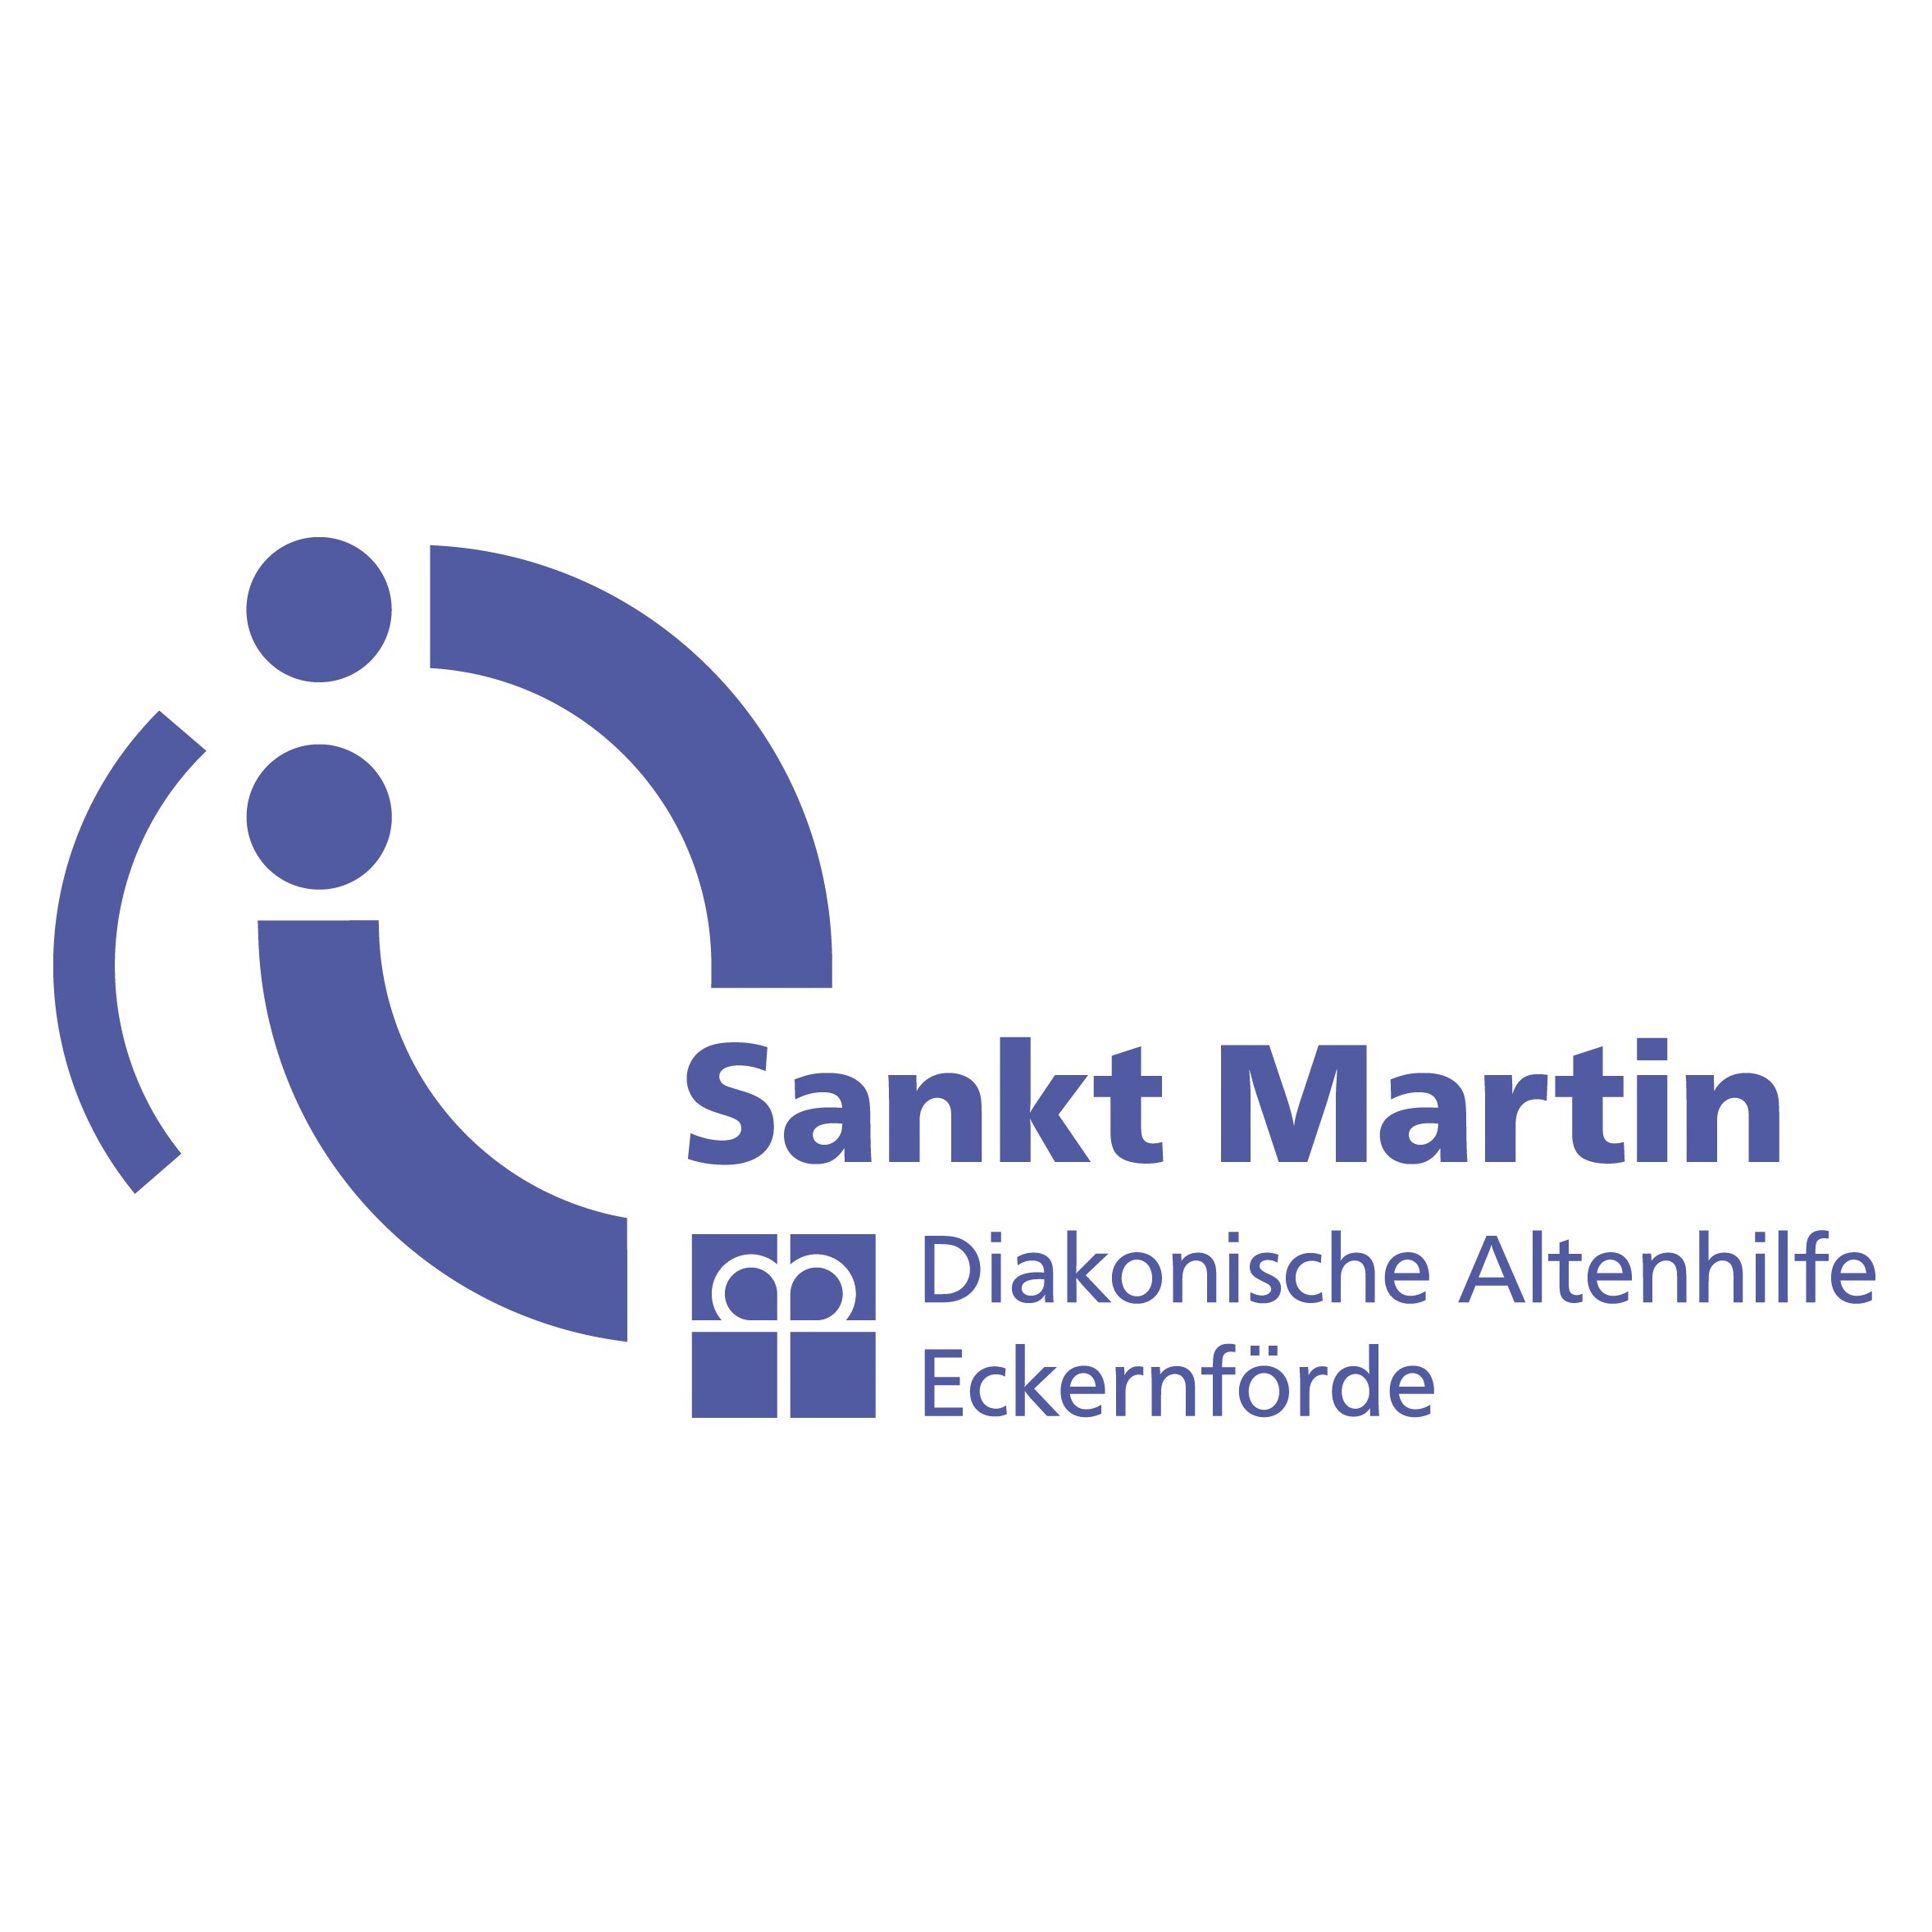 St. Martin Diakonische Altenhilfe Eckernförde gGmbH in Eckernförde - Logo